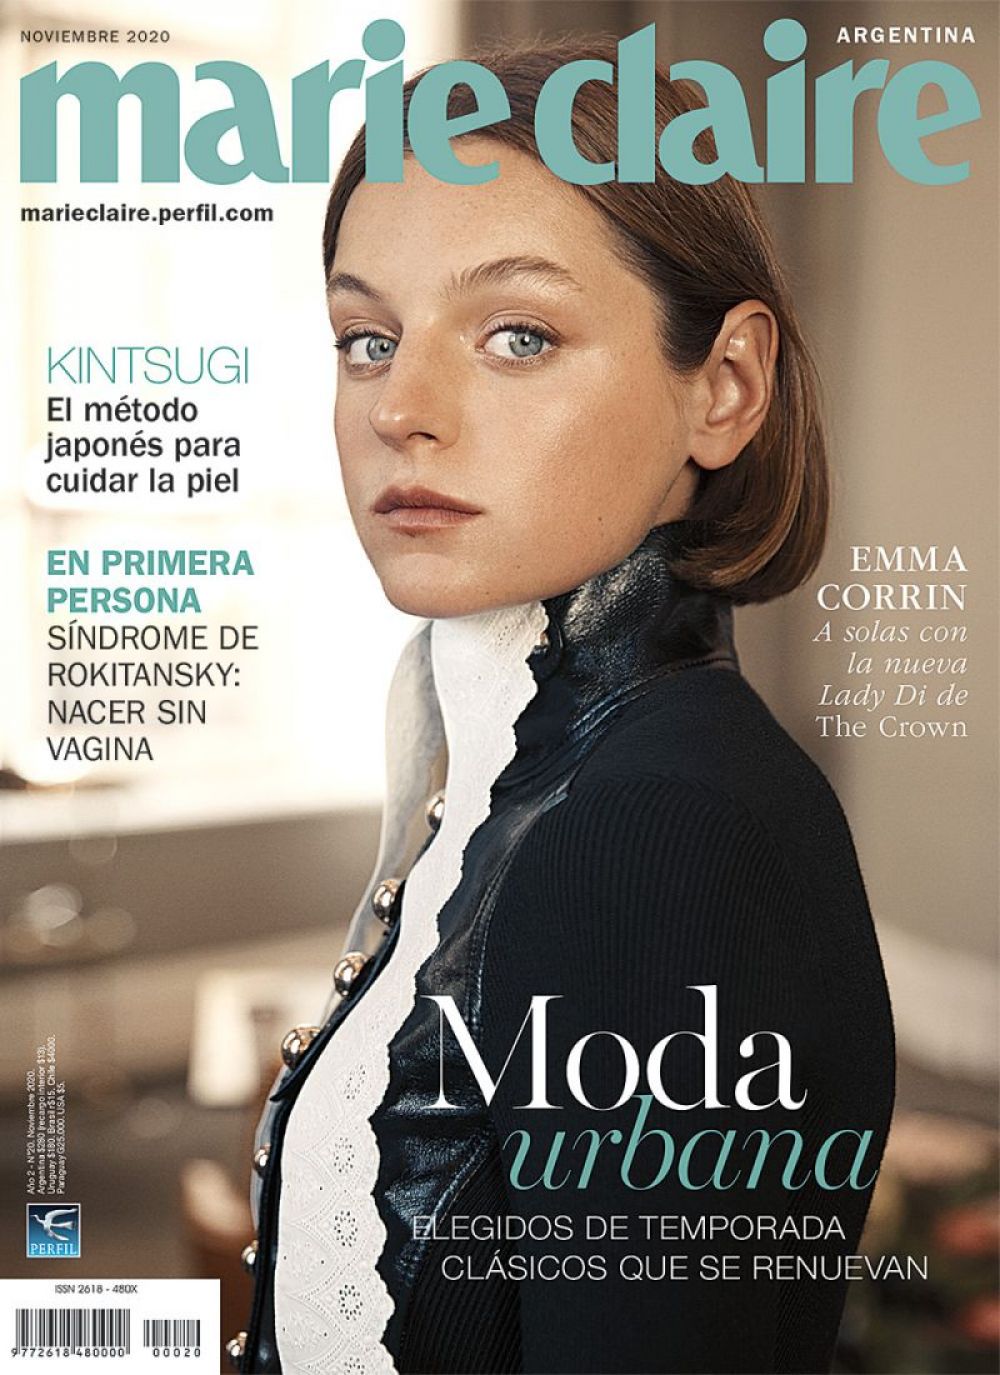 Emma Corrin in Marie Claire Magazine, Argentina November 2020